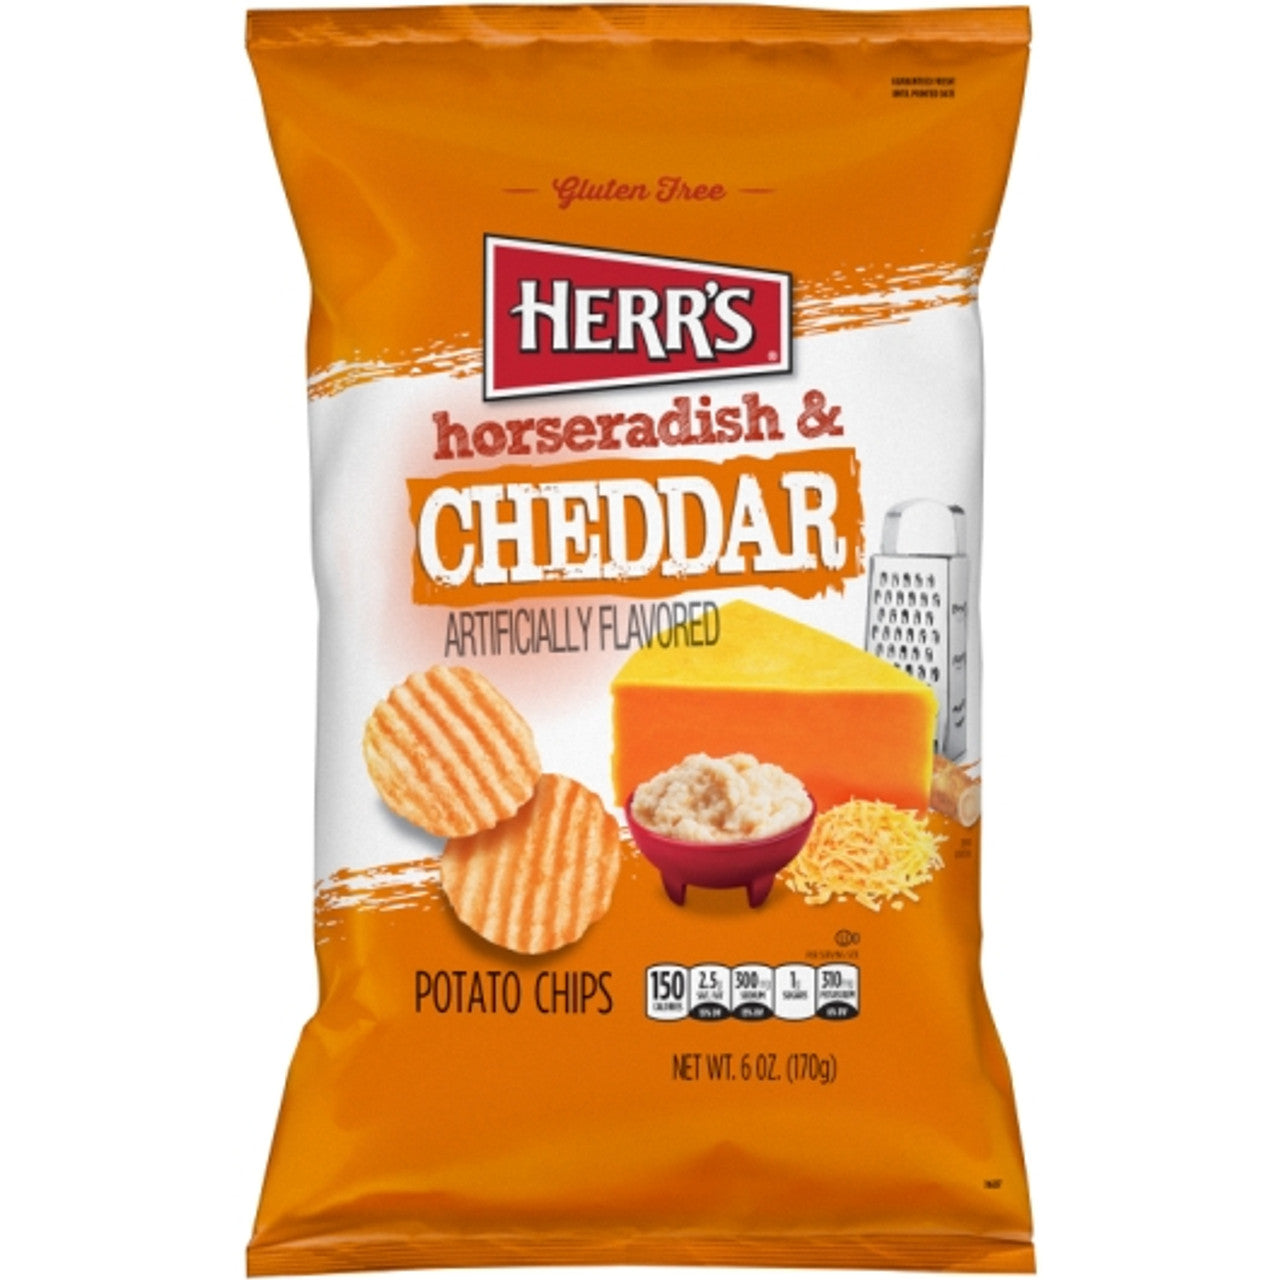 Herr's Potato Chips 6 oz.